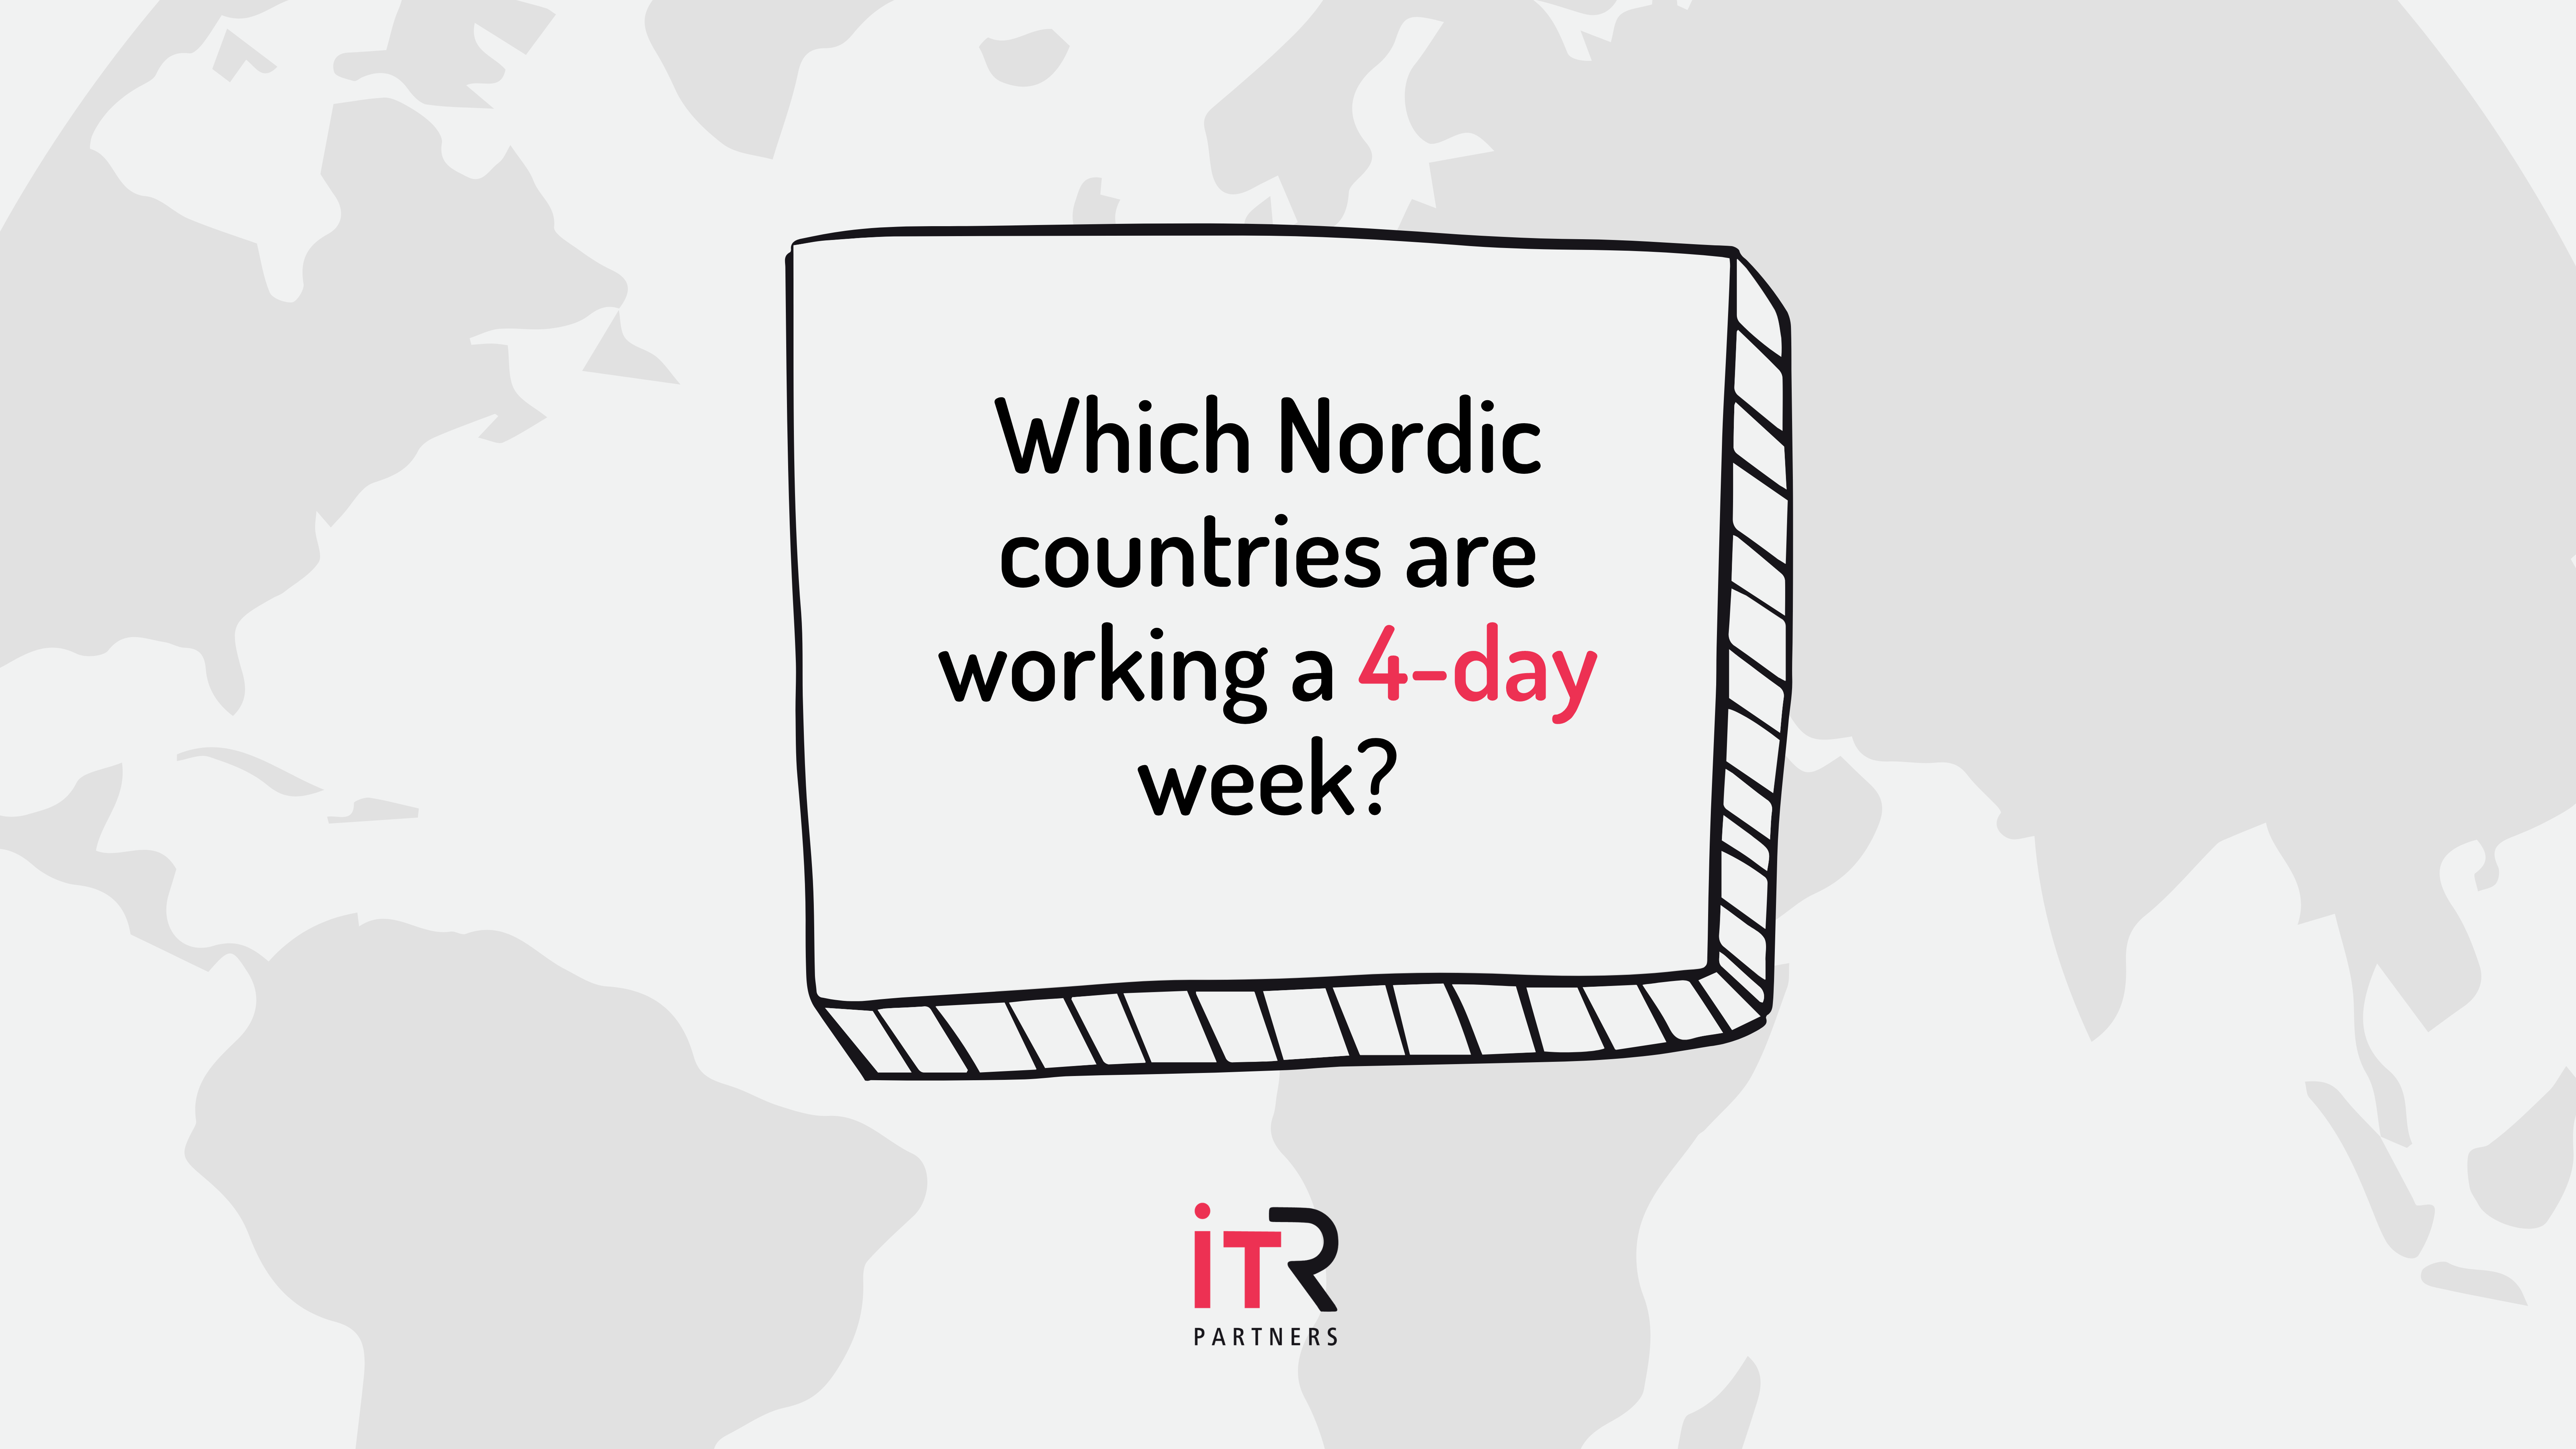 4-day work week in Nordics